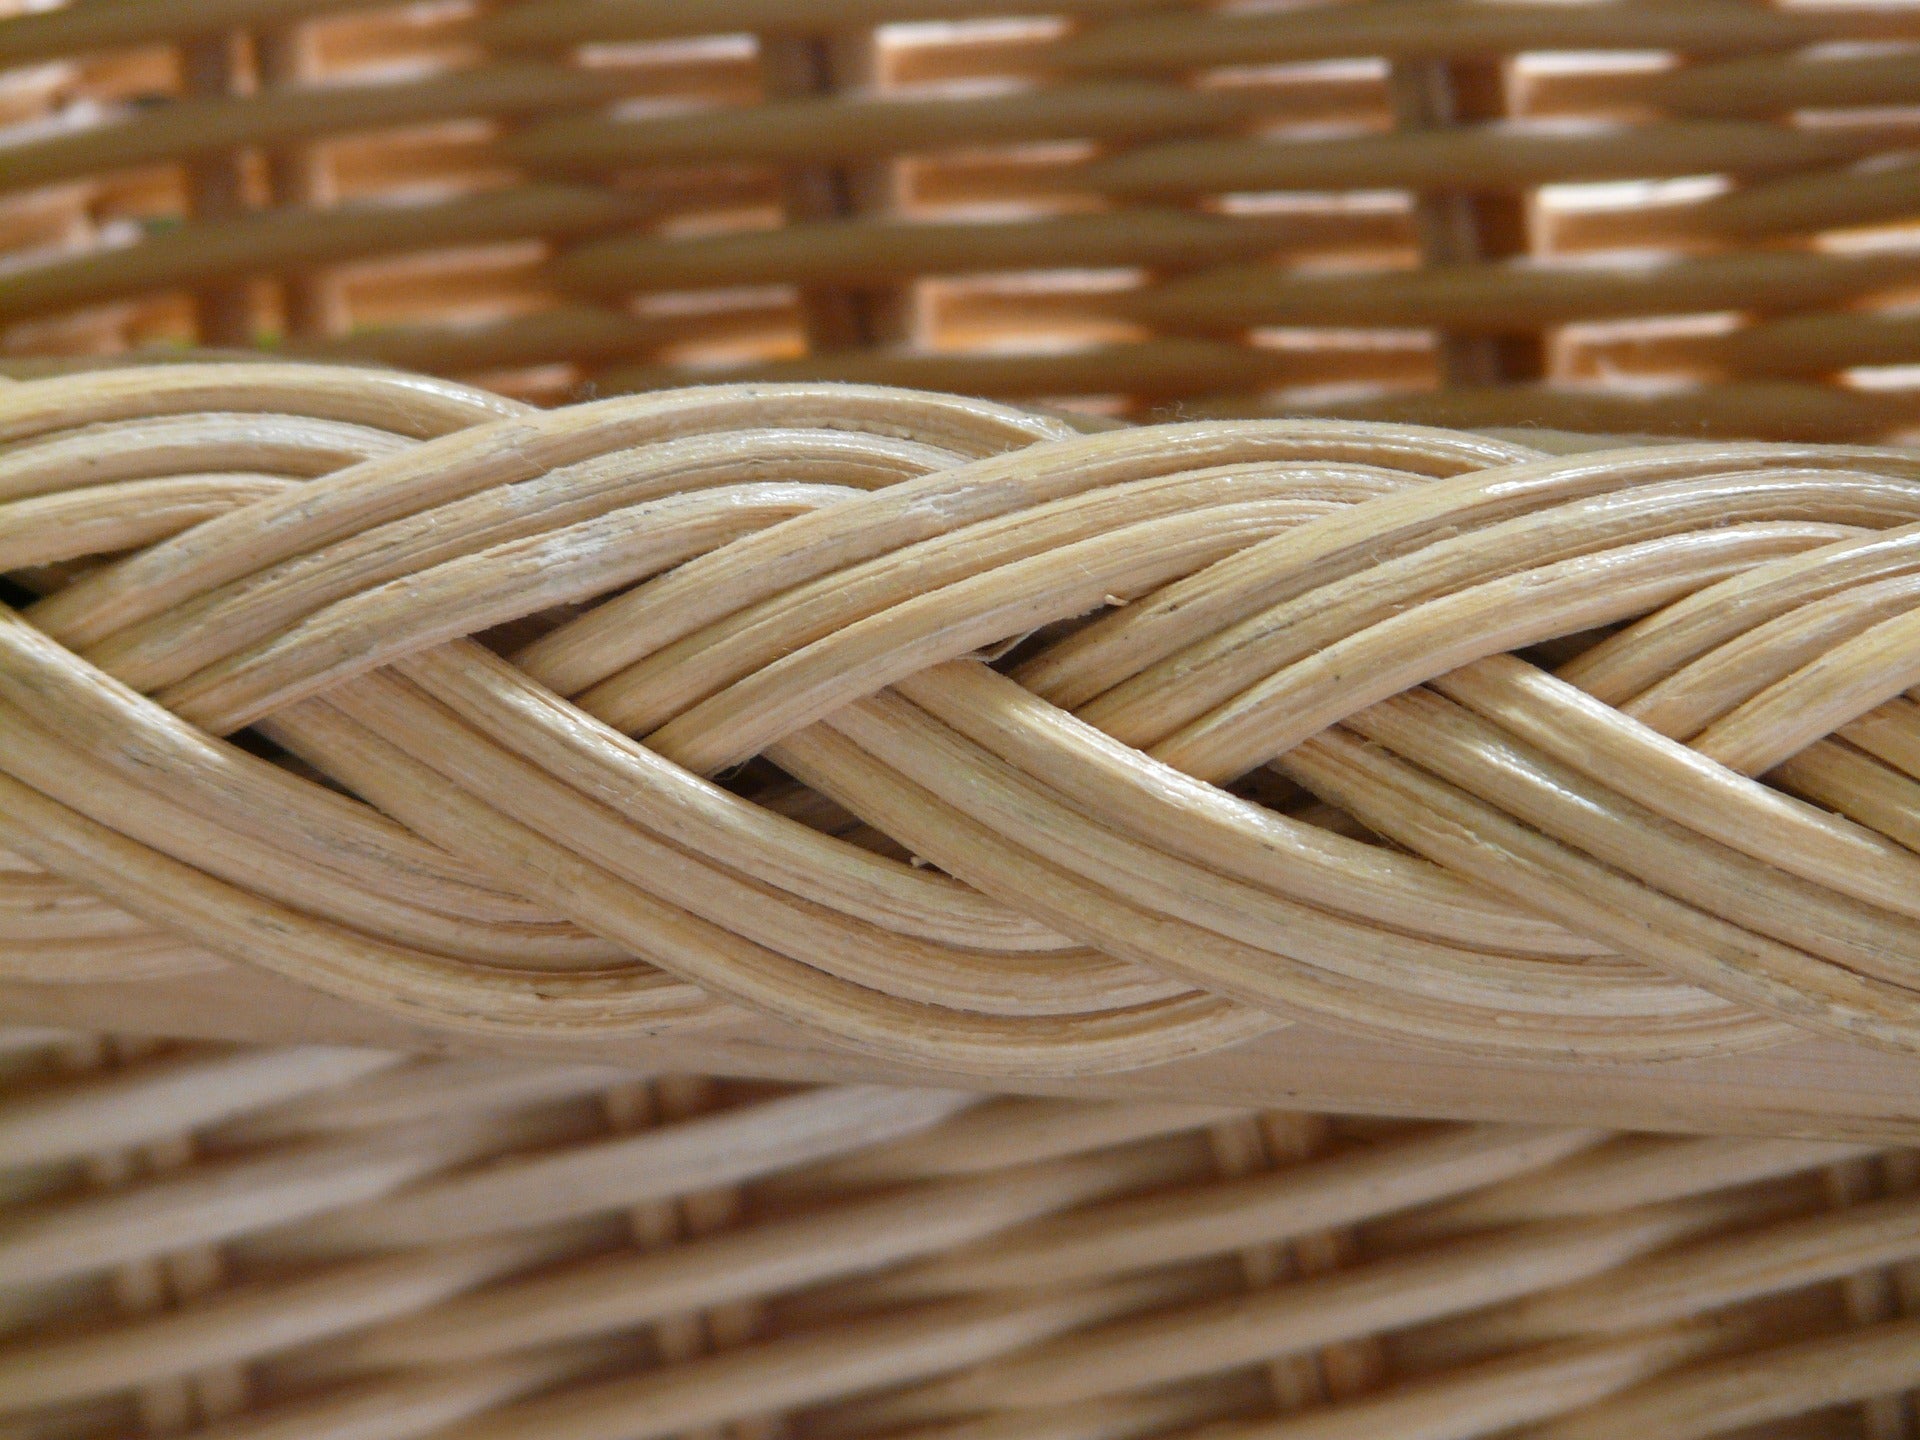 Exploring the durability and longevity of rattan furniture